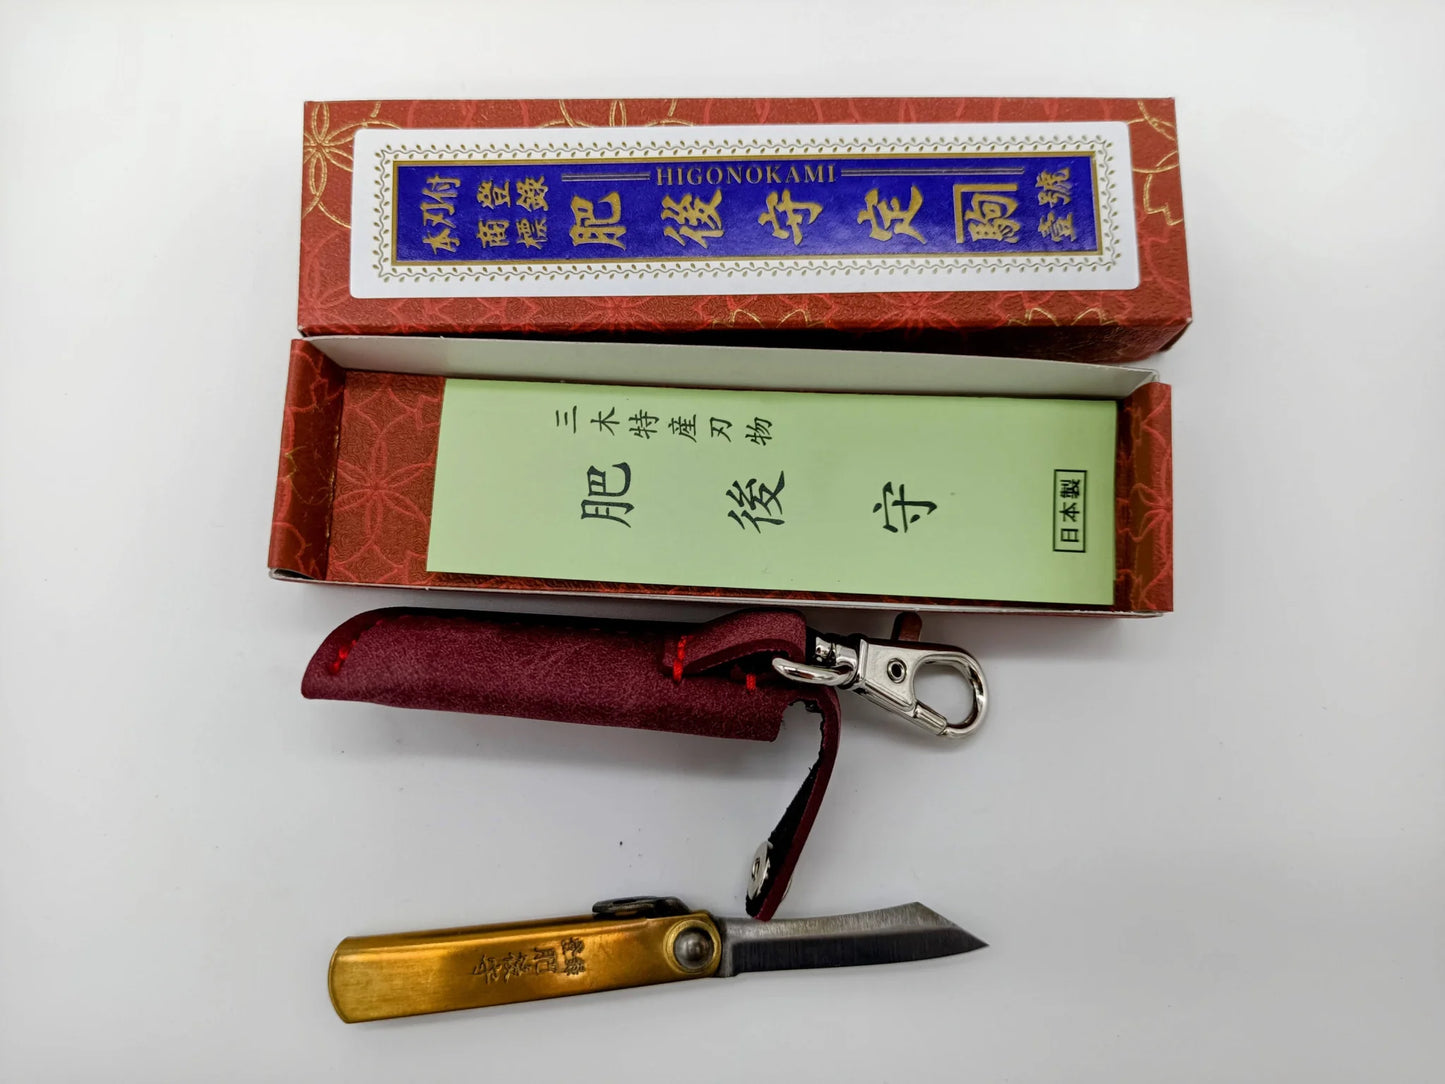 Mini Higonokami porte - clés